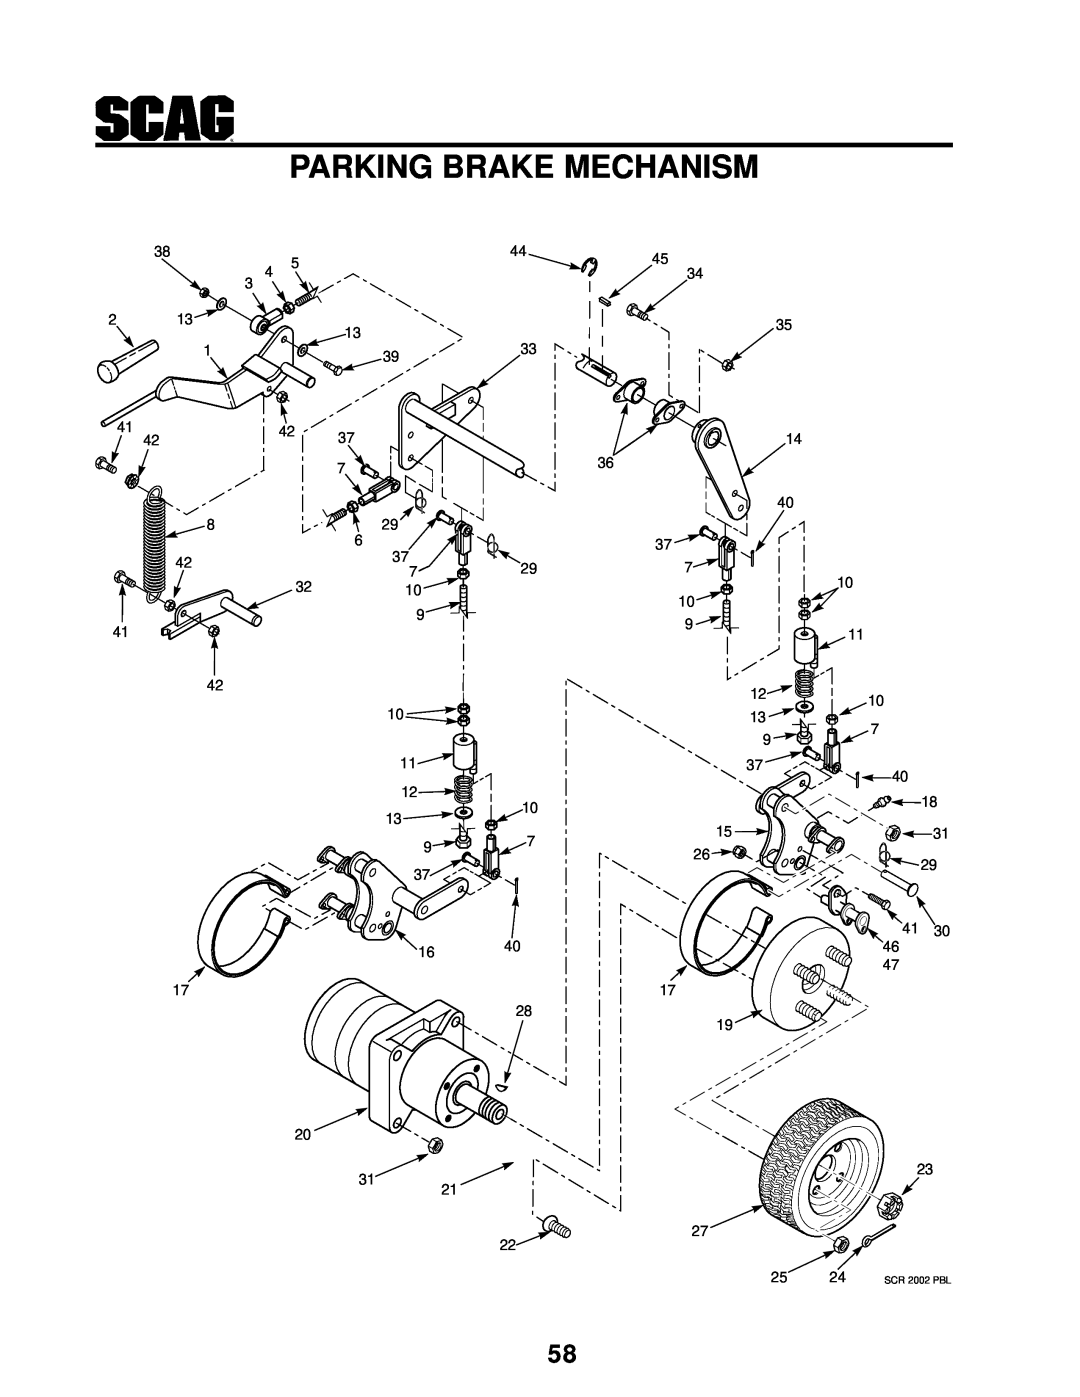 MB QUART manual Parking Brake Mechanism, SCR 2002 PBL 